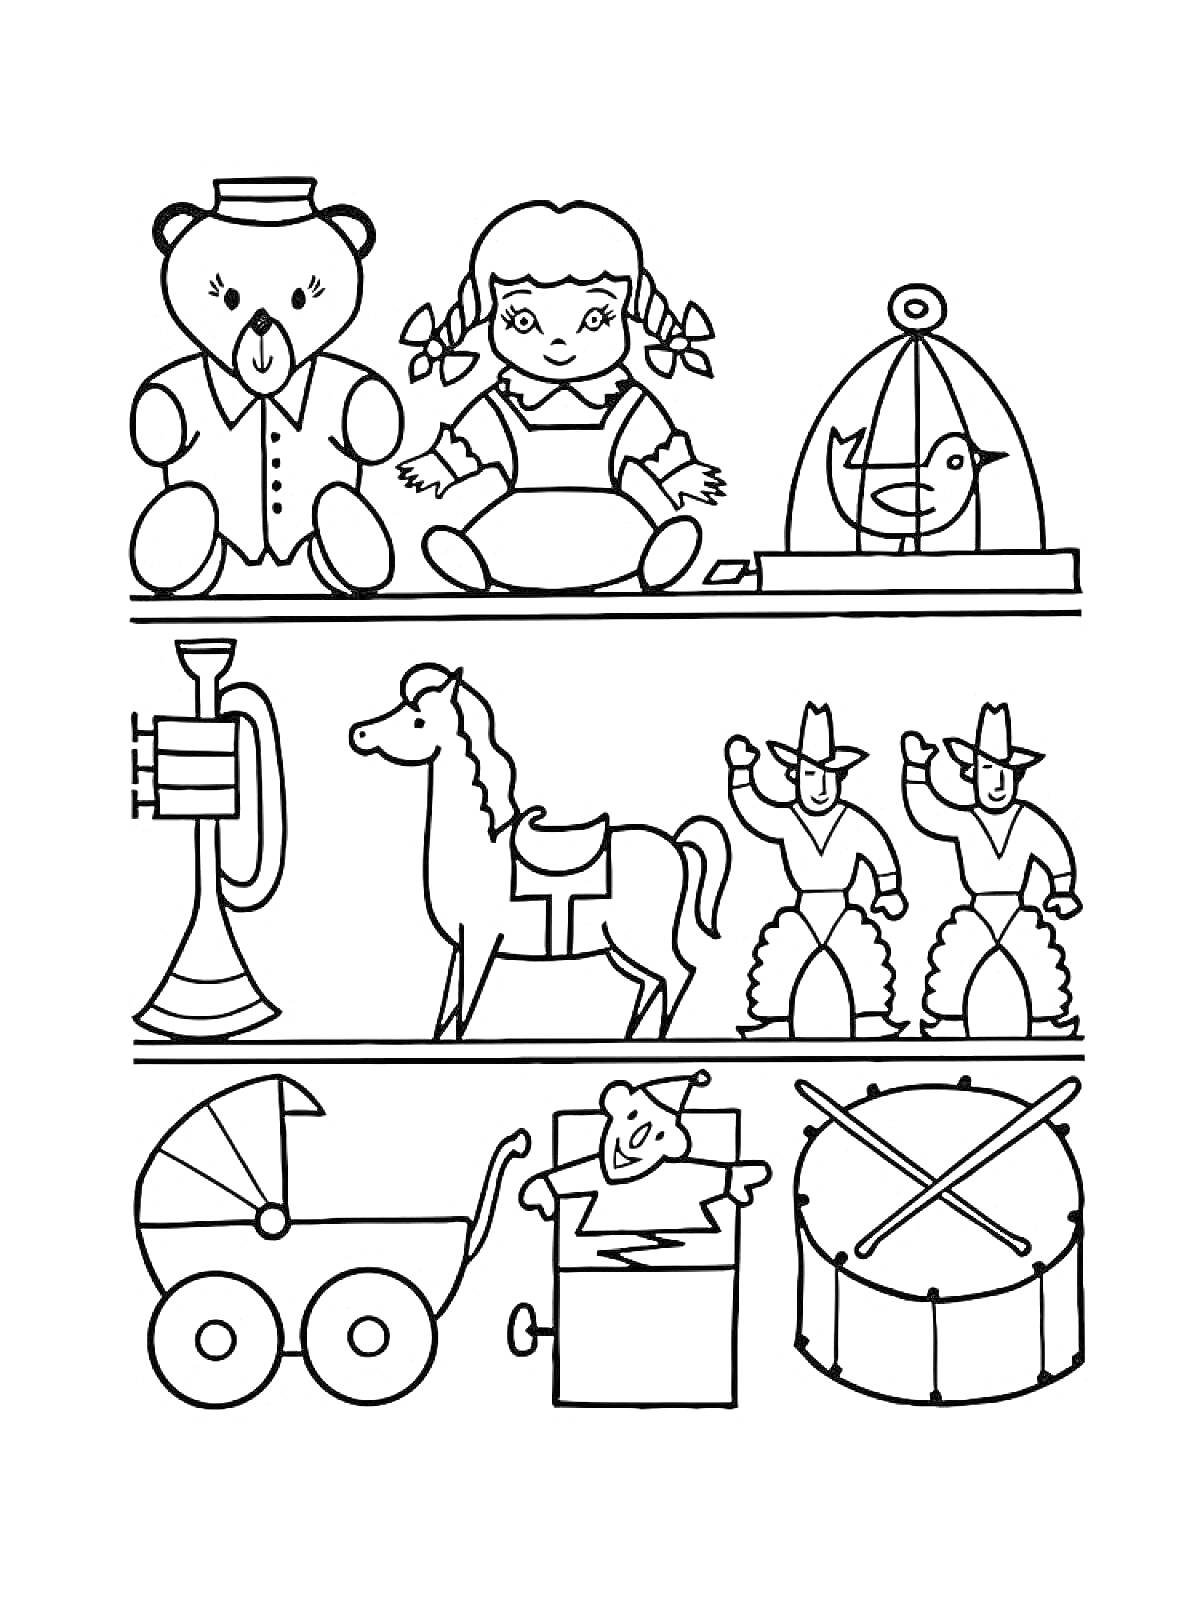 На раскраске изображено: Медведь, Кукла, Игрушка, Клетка, Птица, Труба, Лошадка, Ковбои, Коробка, Клоун, Барабан, Магазин игрушек